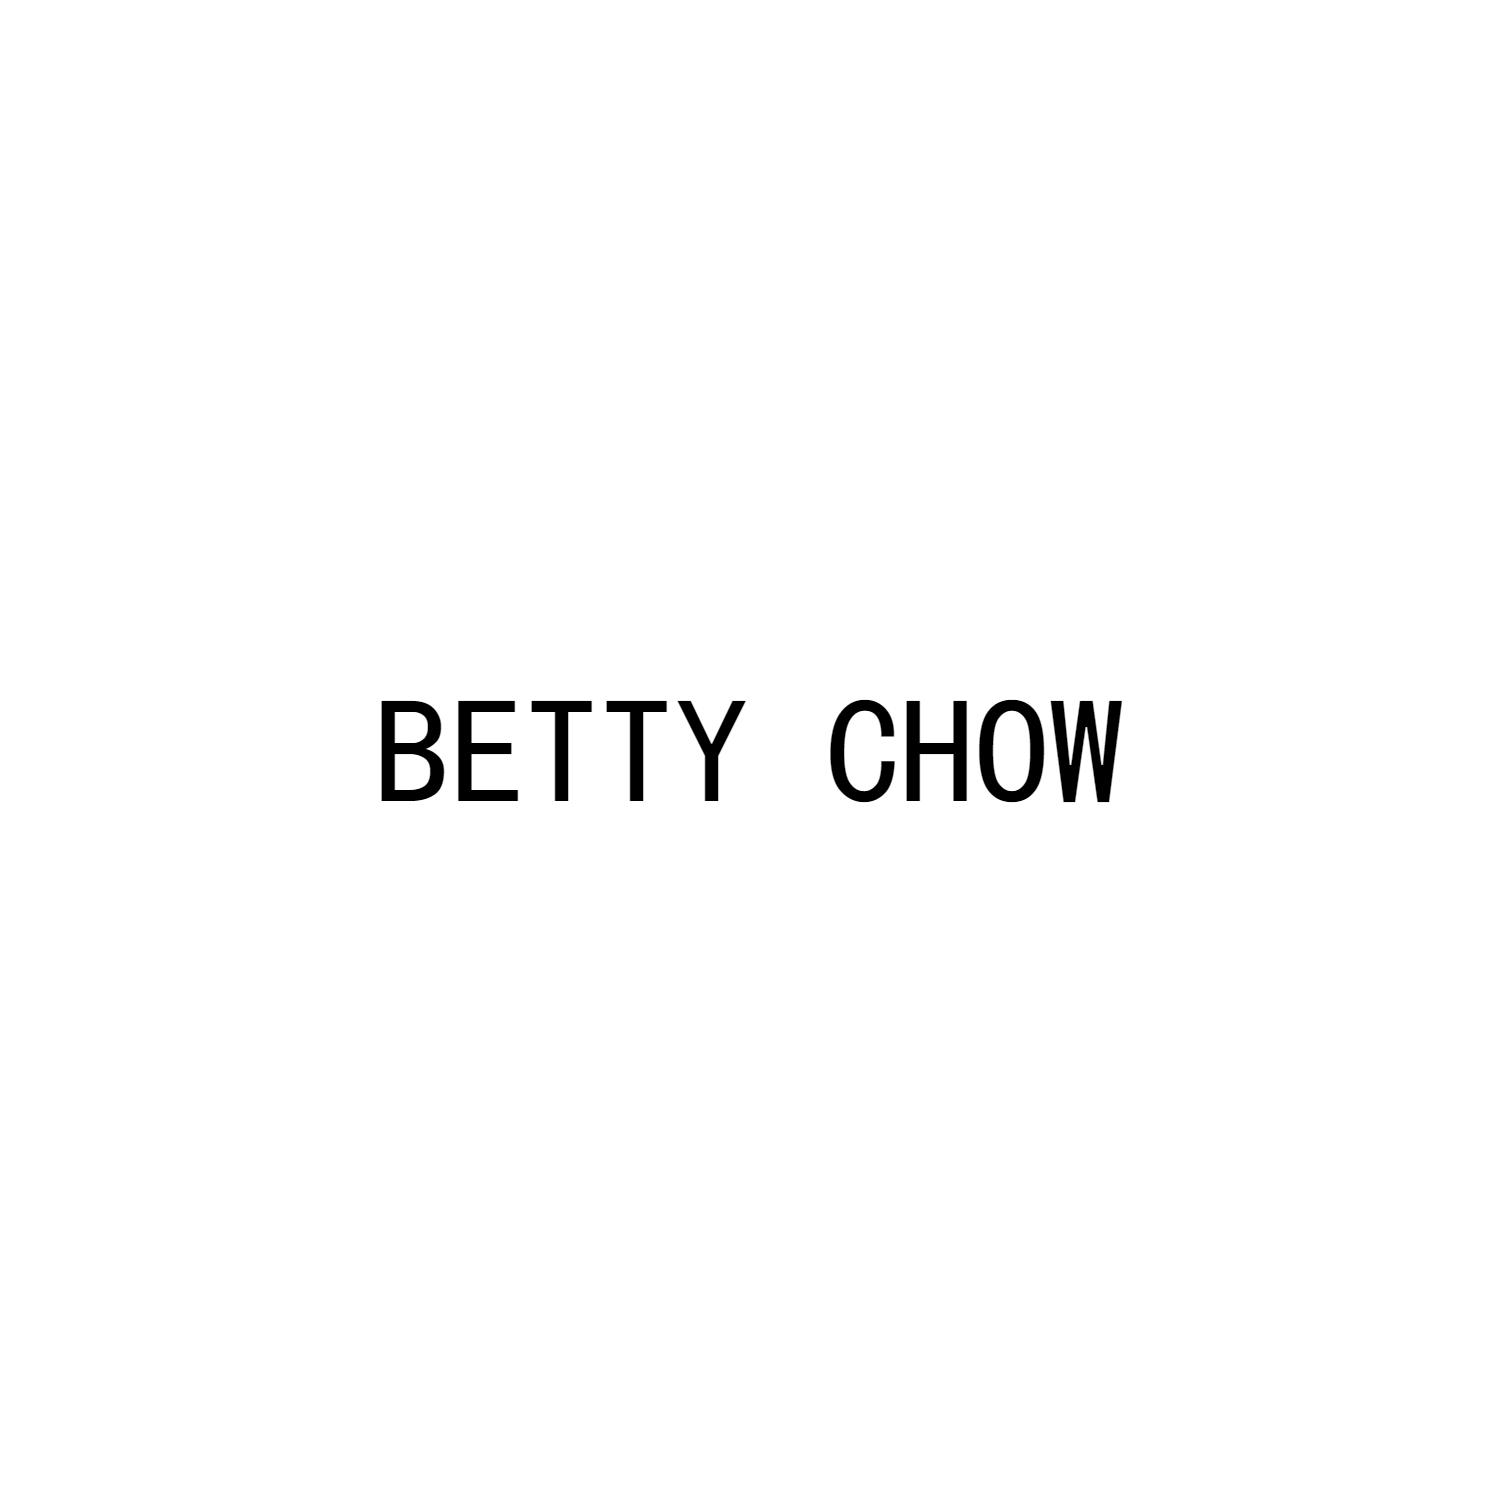 BETTY CHOW